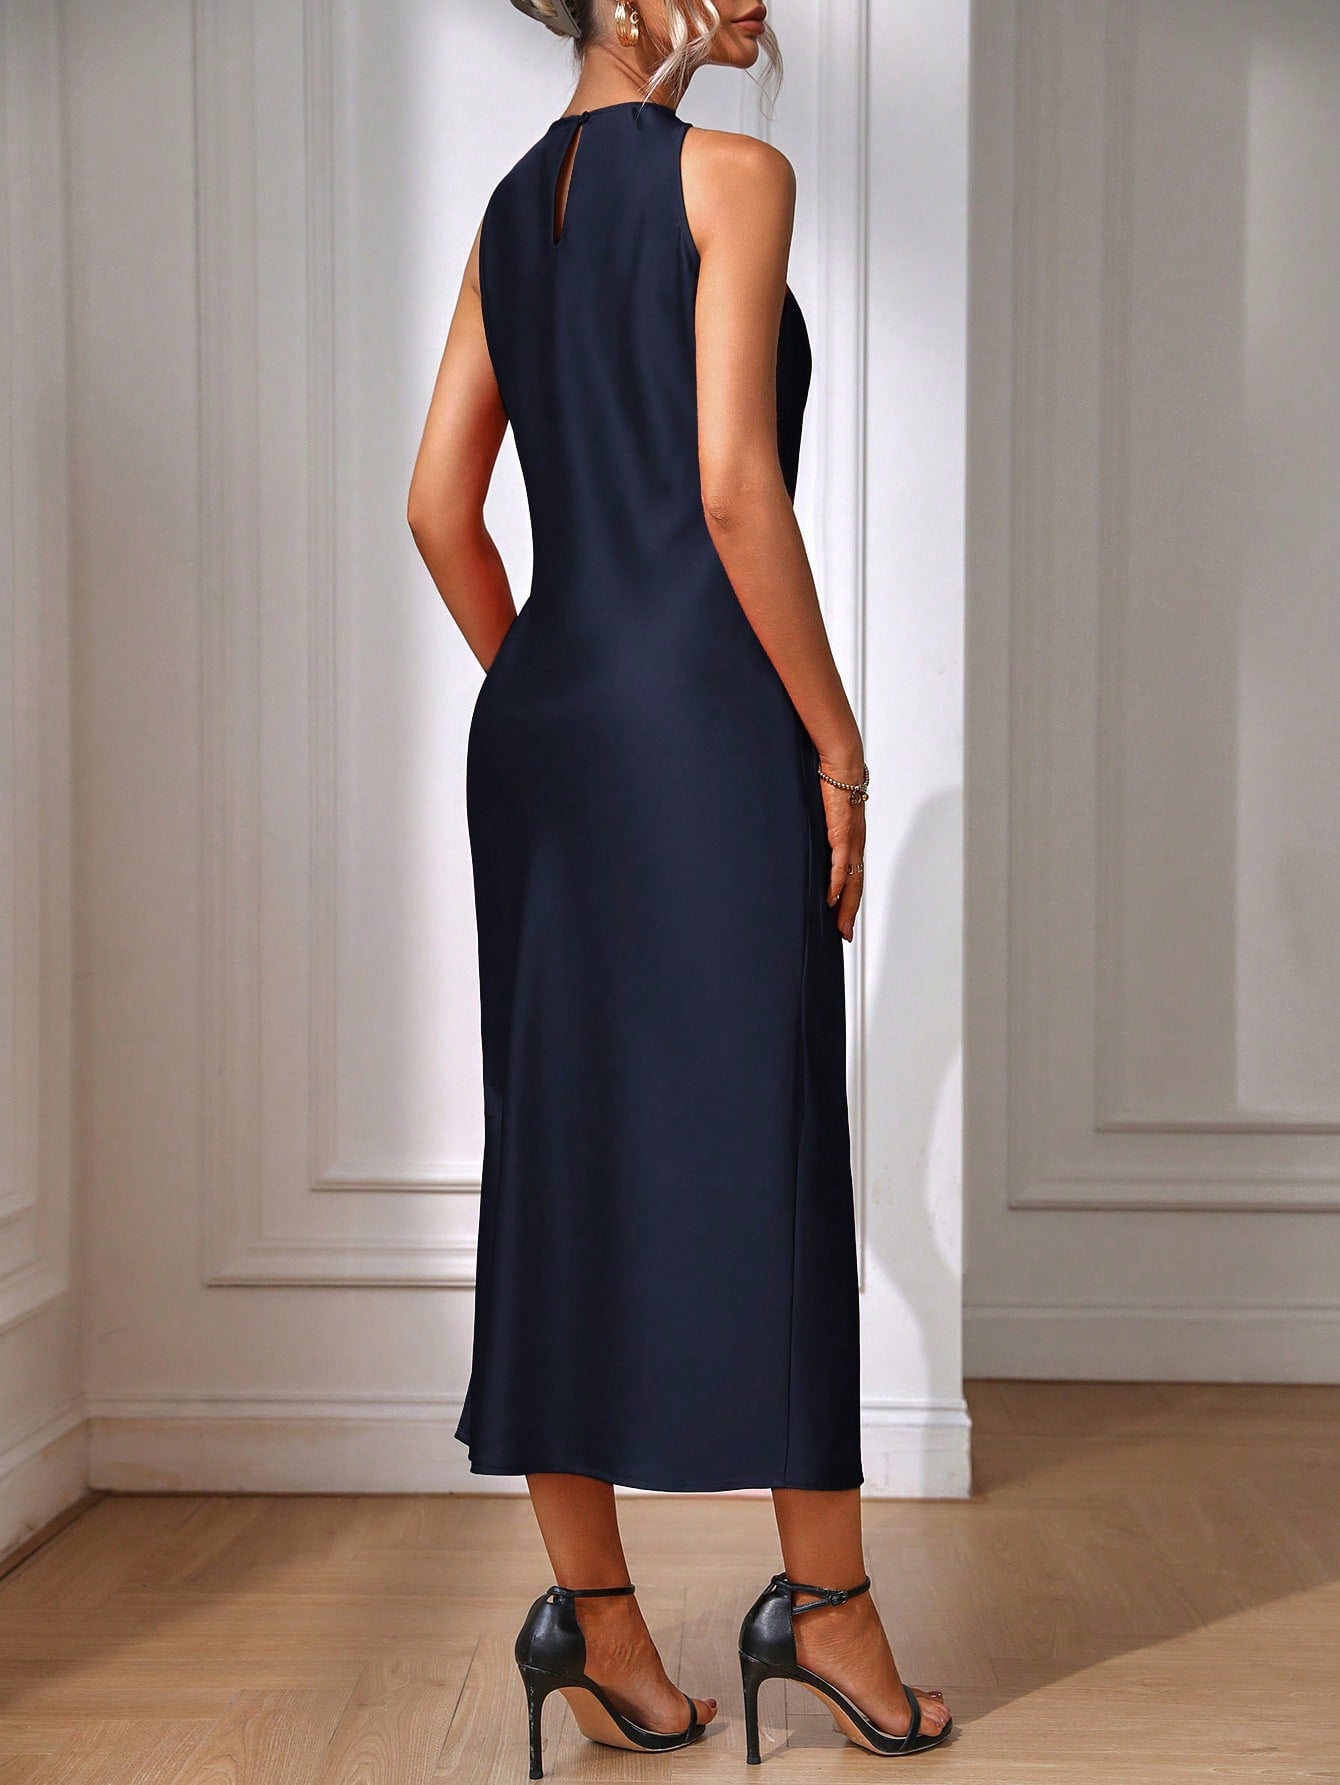 So Versatile! SHEIN Clasi Women's Sleeveless Long Dress